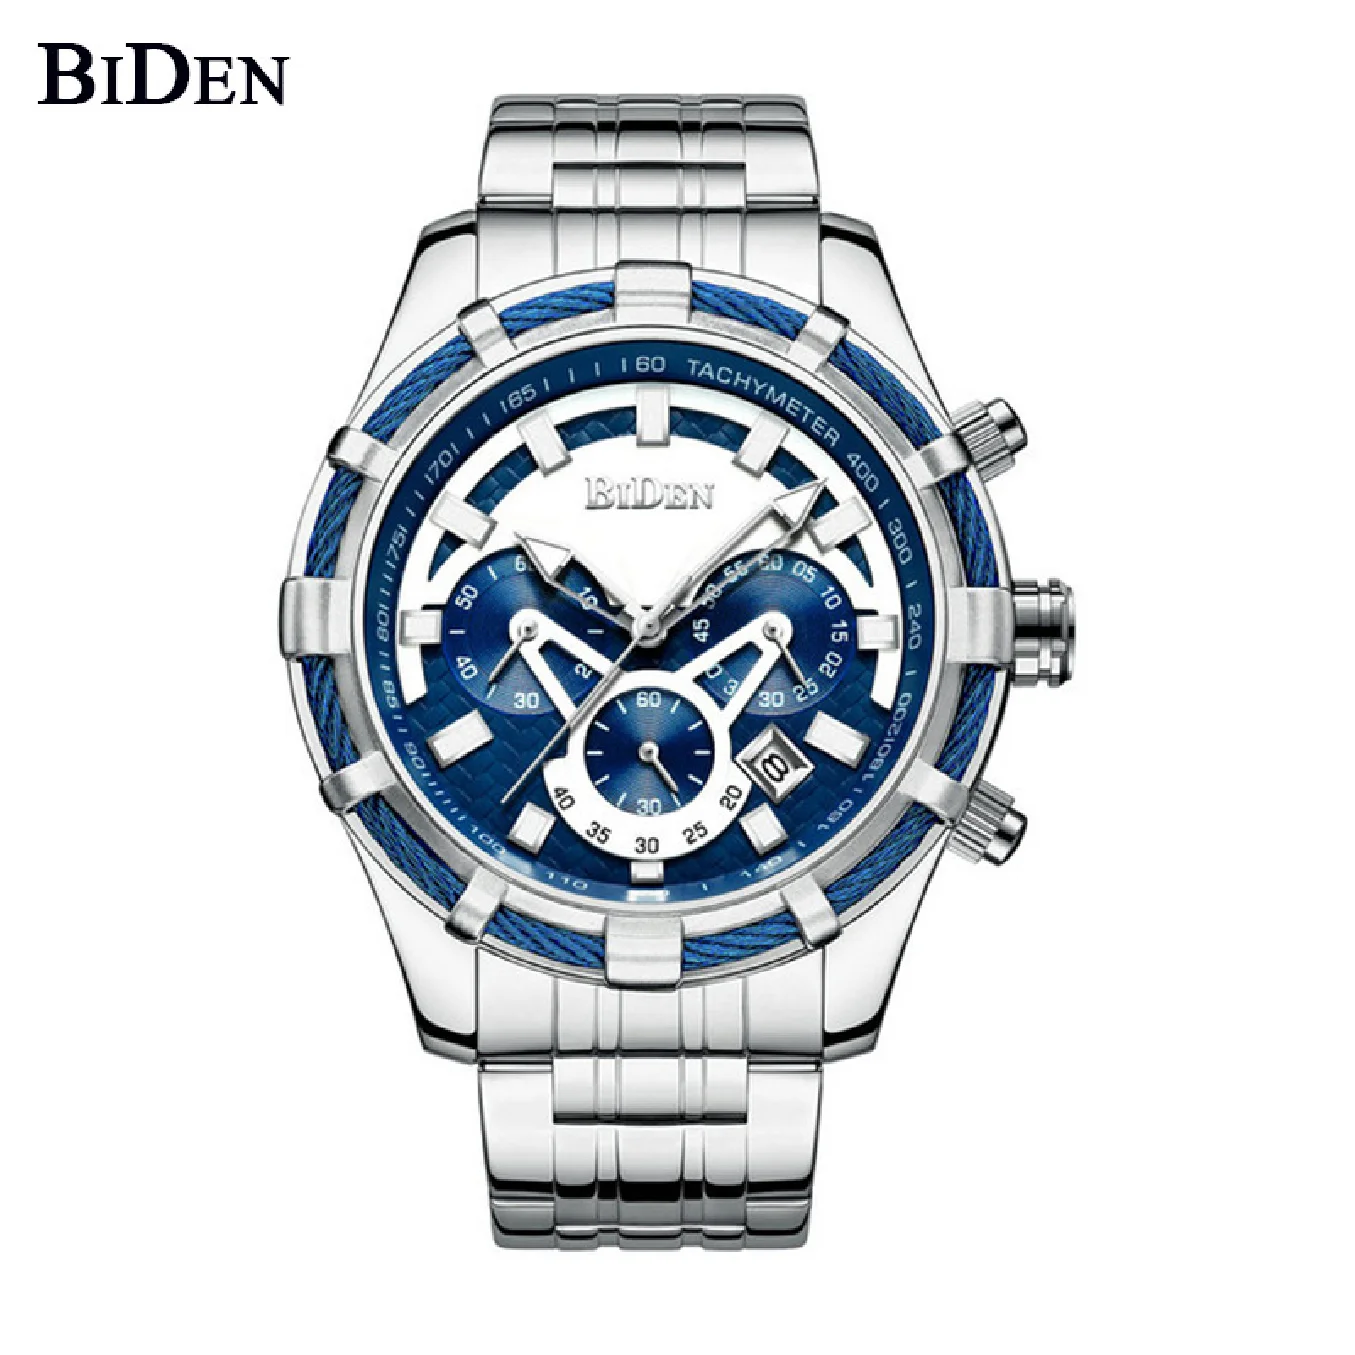 

BIDEN Men's Watches Quartz Analog Steel Band Wristwatch Chronograph Calendar Clocks For Male Watch Gift relogio masculino hombre